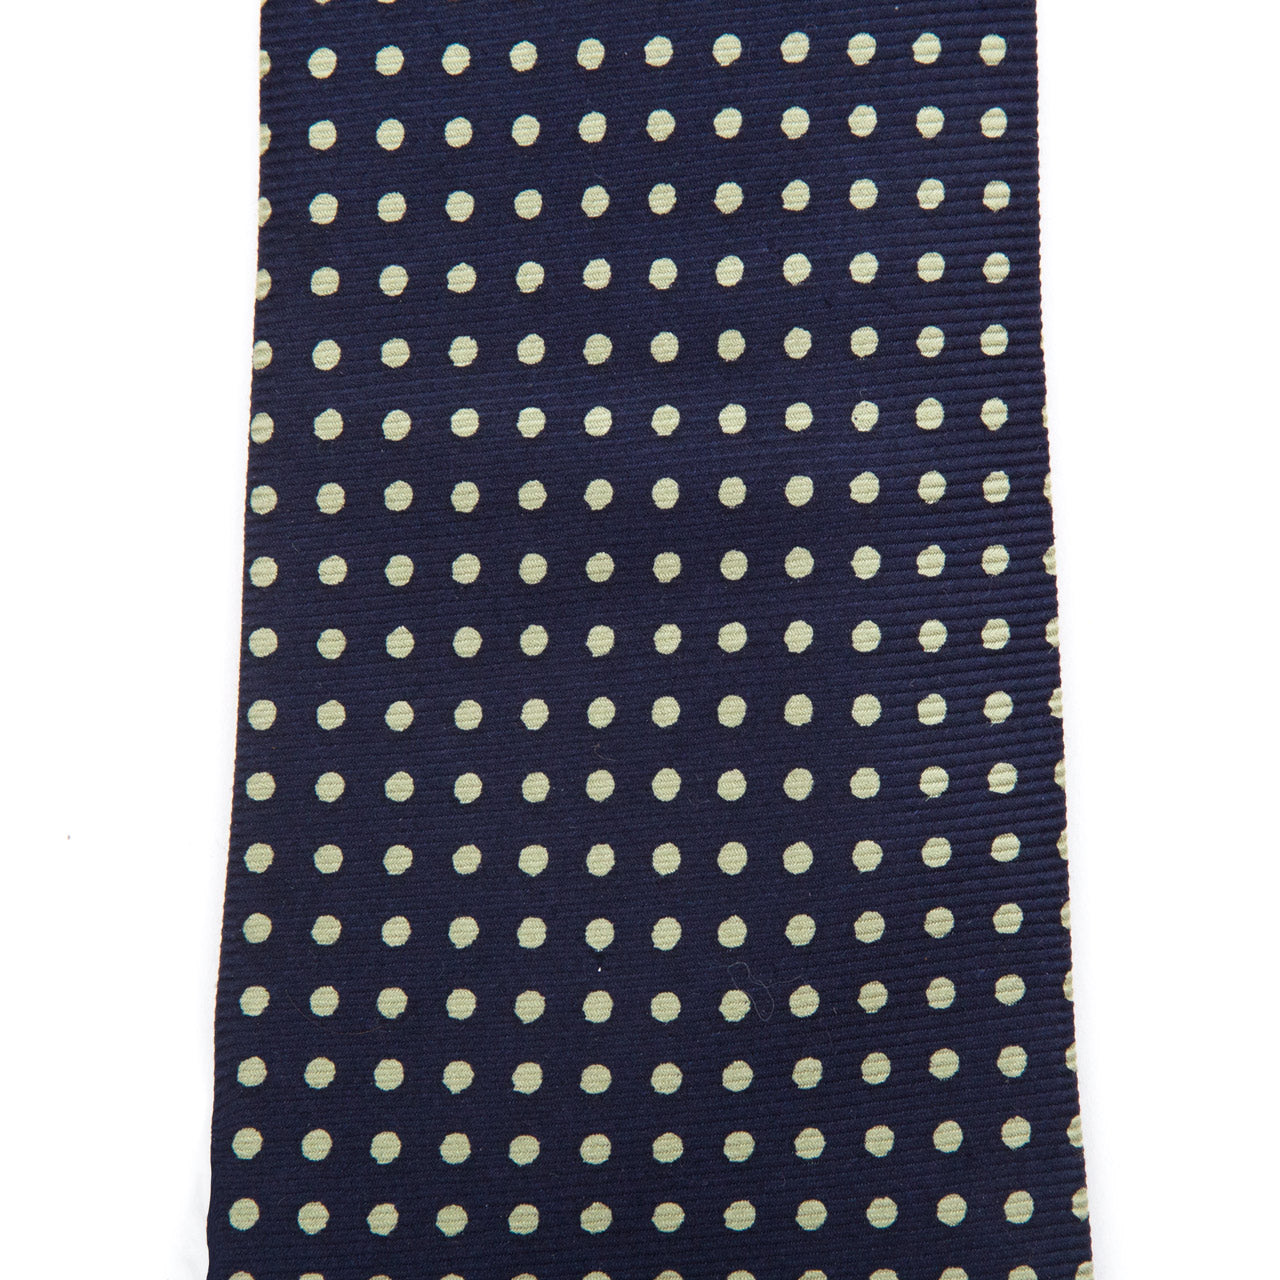 Navy blue speckled tie